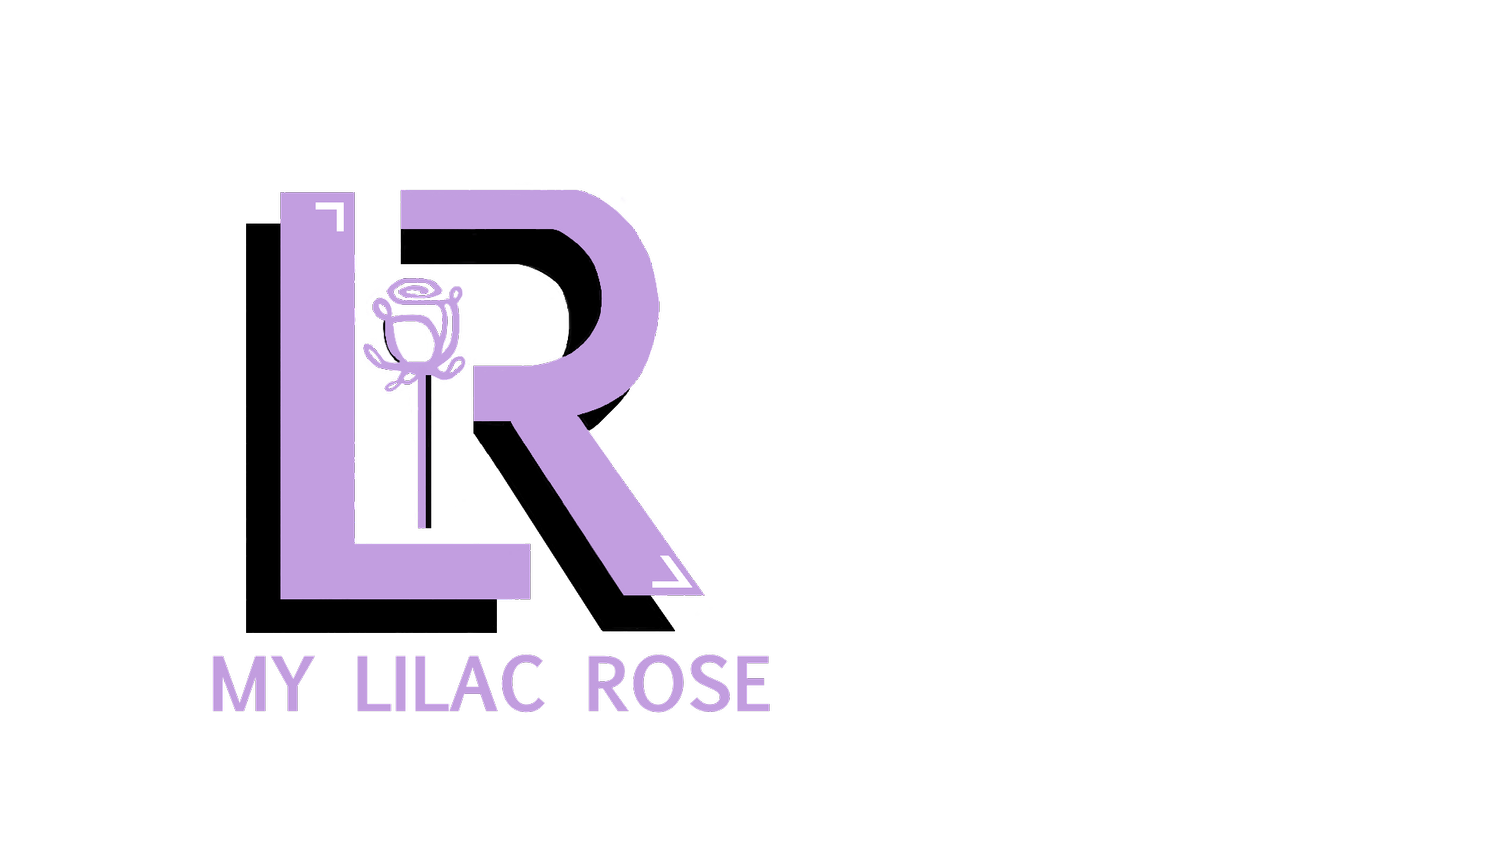 My Lilac Rose